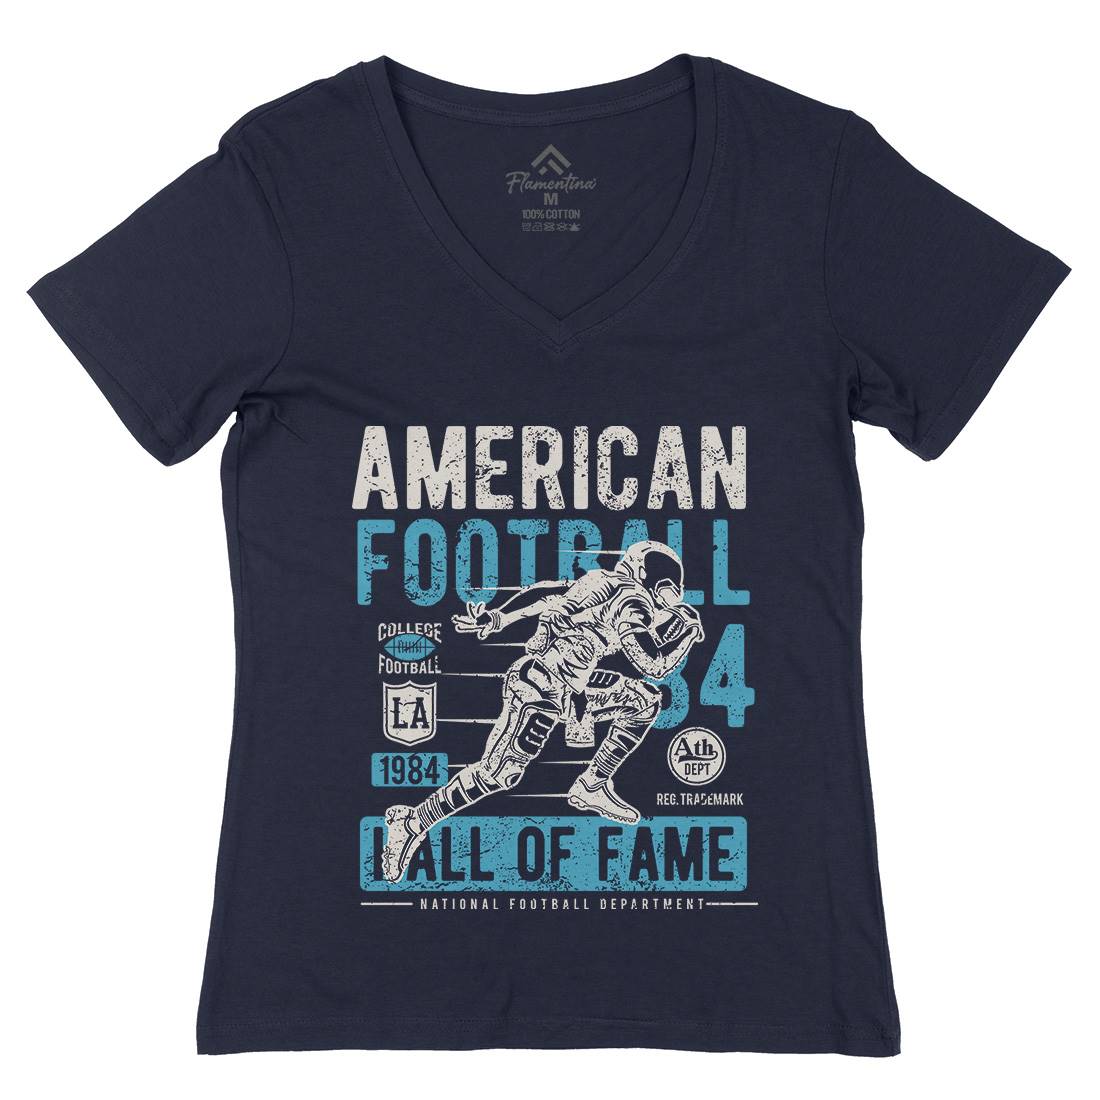 American Football Womens Organic V-Neck T-Shirt Sport A006